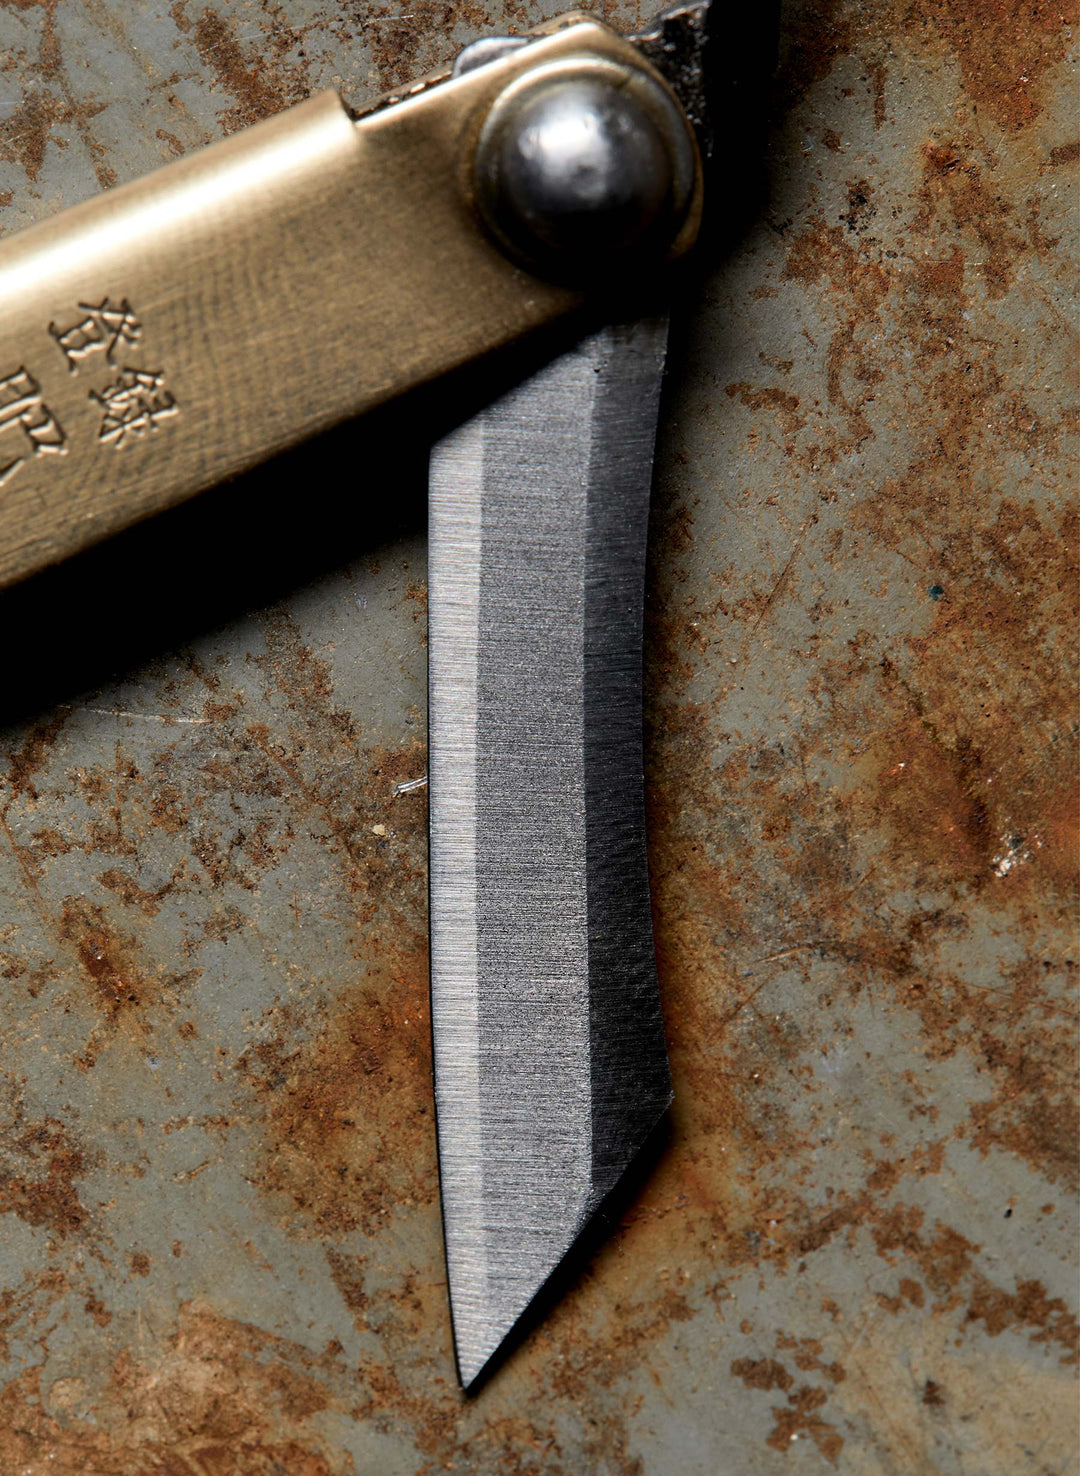 a close up of a pocket knife